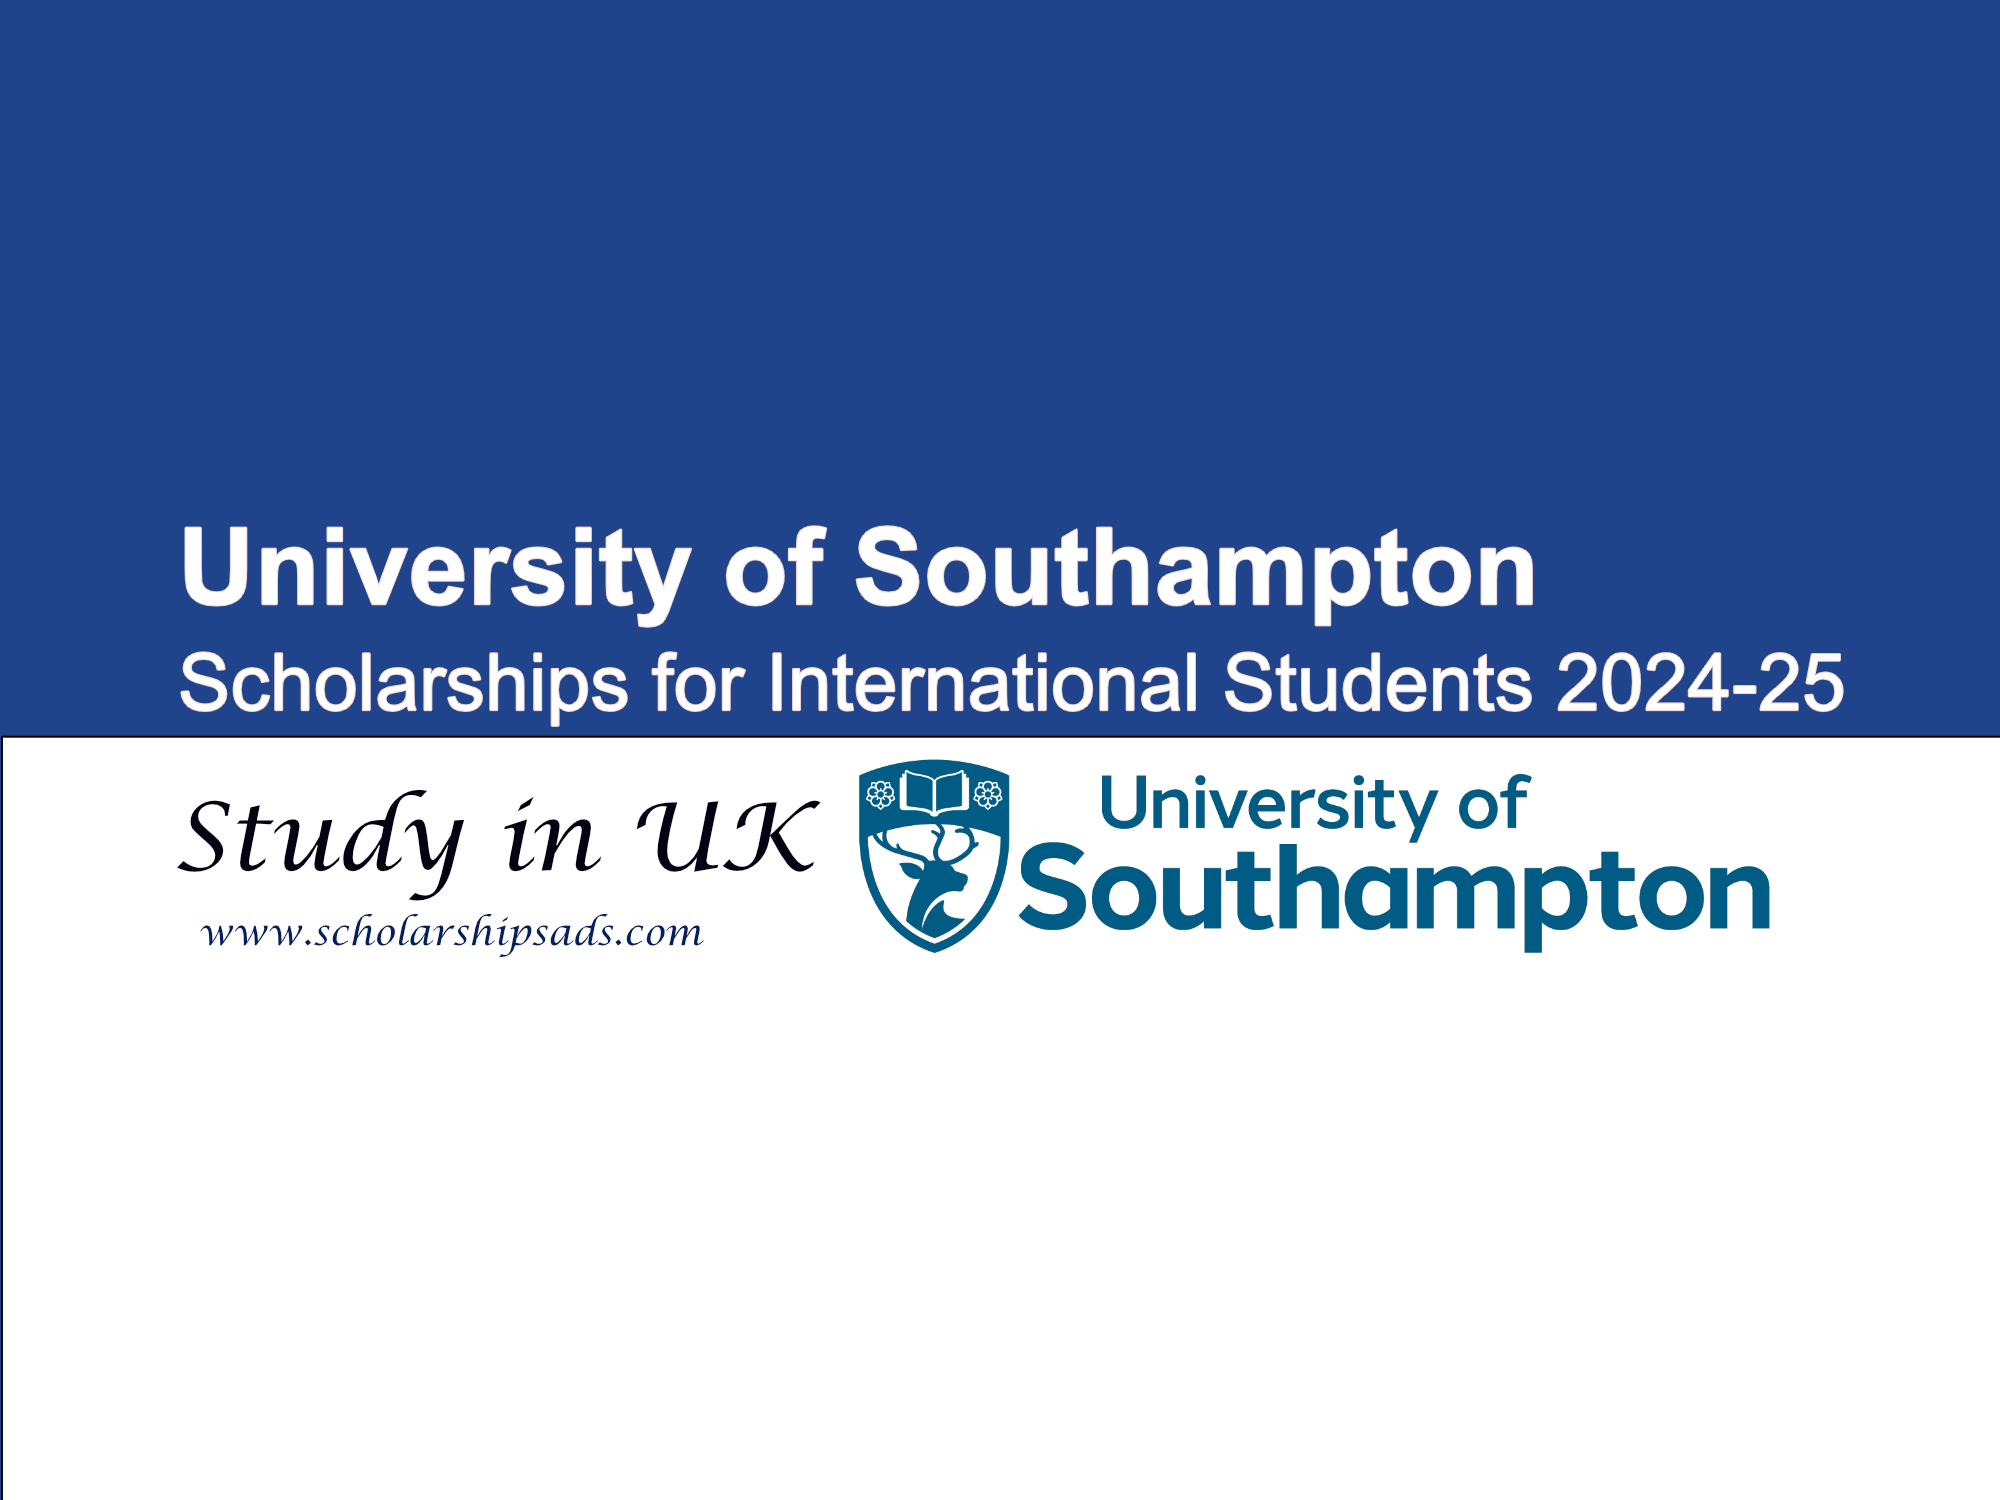  University of Southampton Scholarships. 